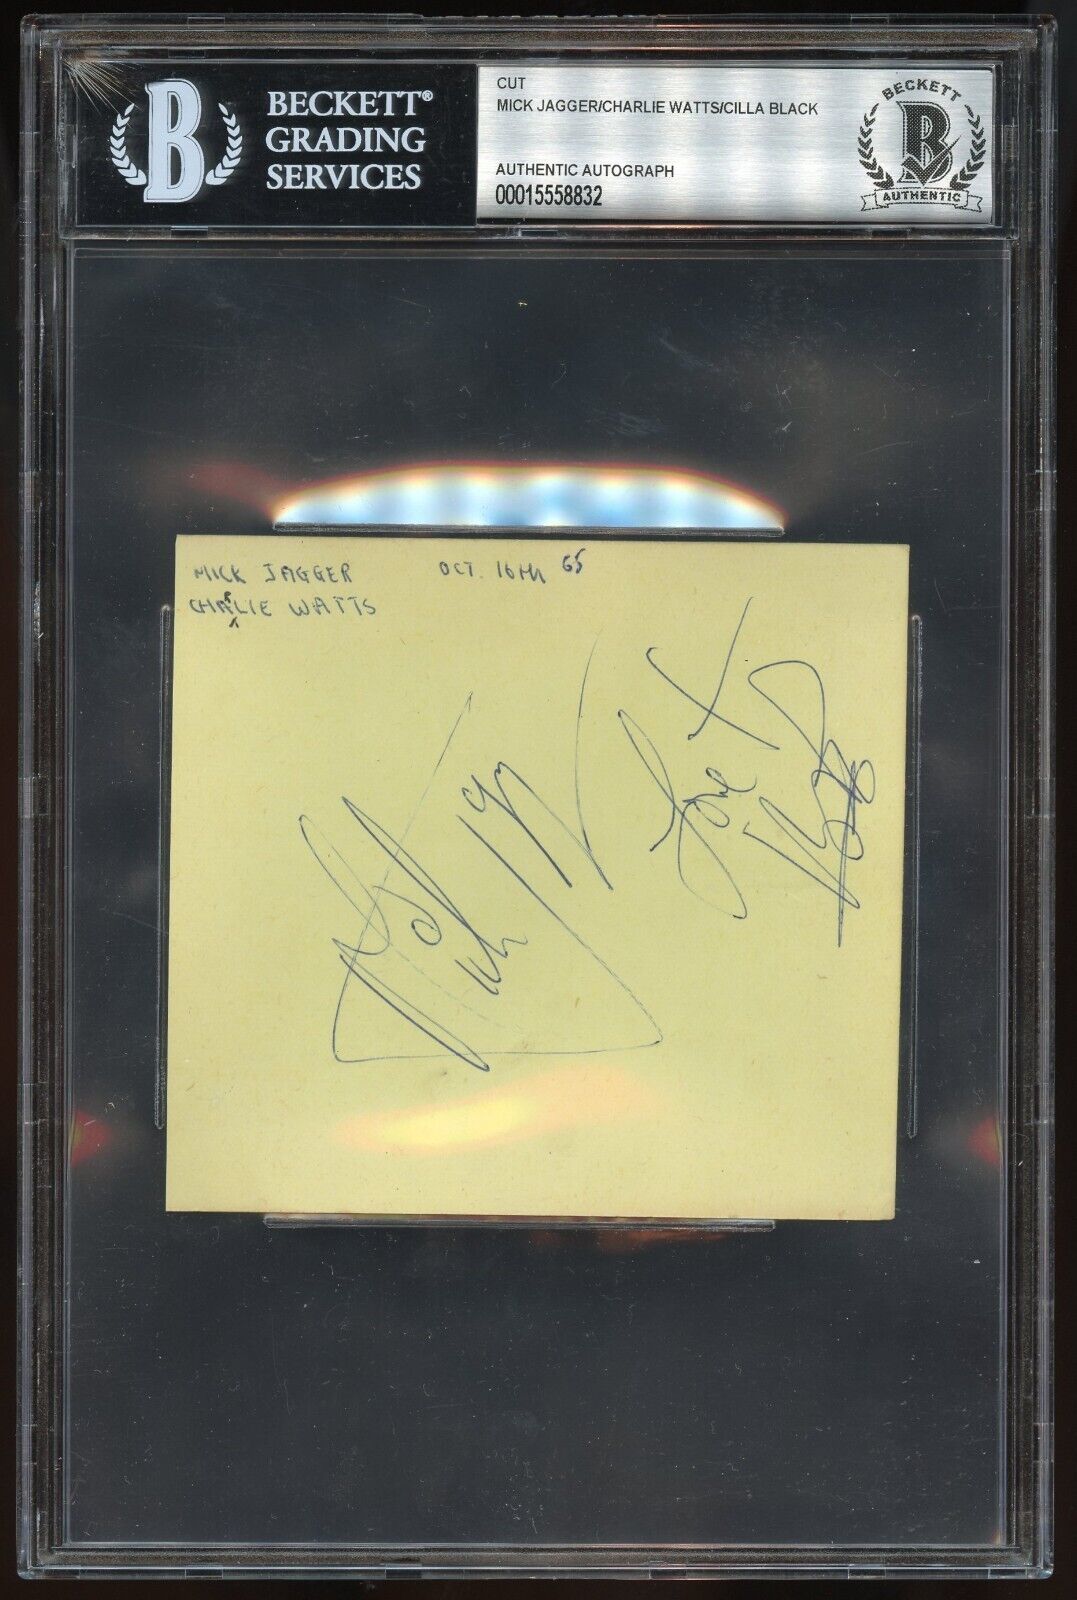 Mick Jagger Charlie Watts Cilla Black signed autograph 3x4 cut Celebrities BAS